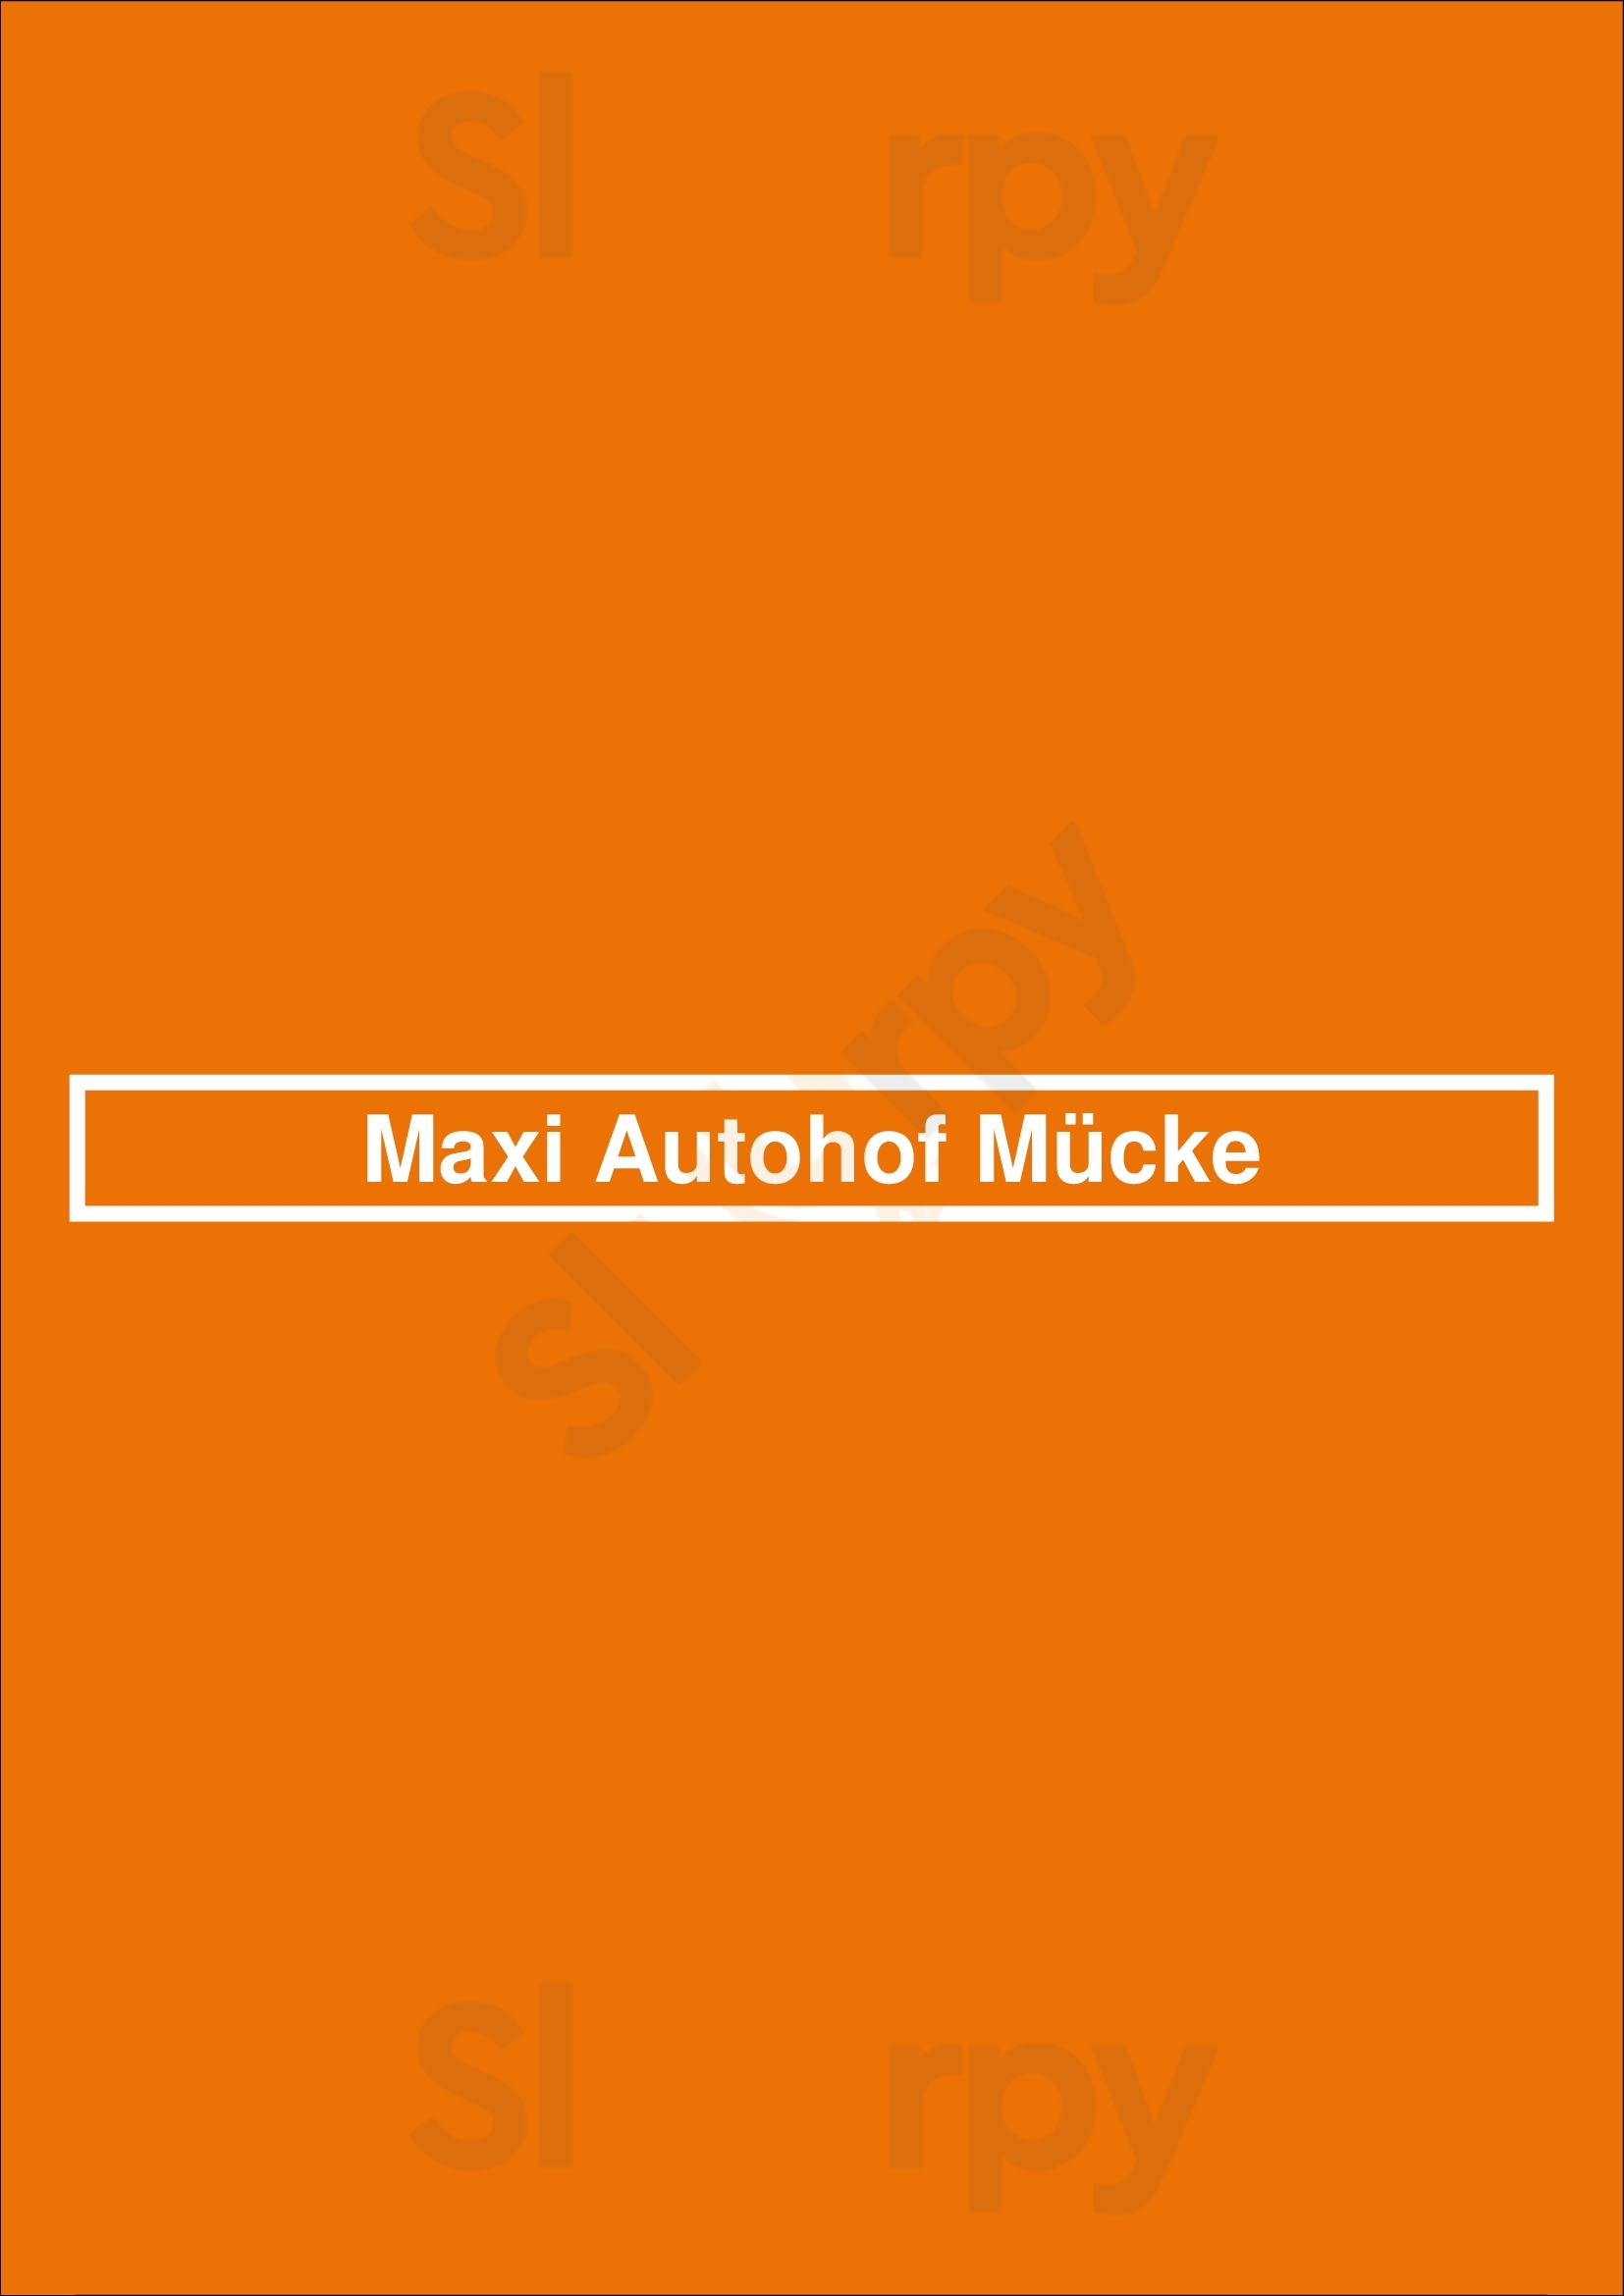 Maxi Autohof Mücke Mücke Menu - 1